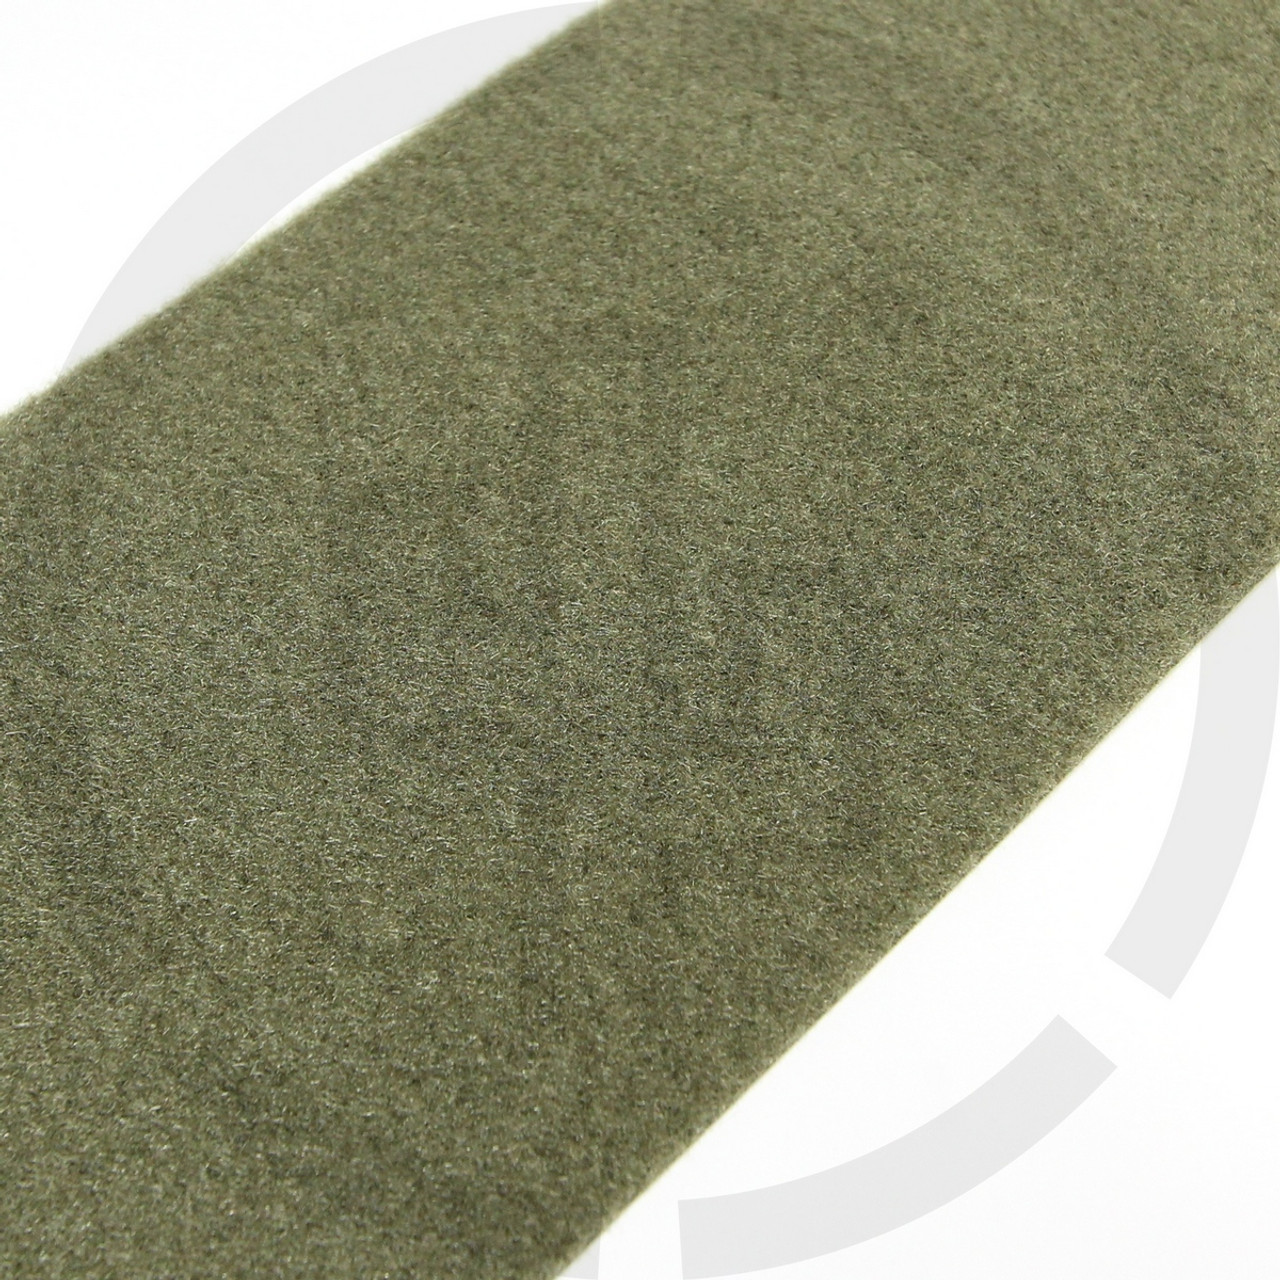 4 Velcro® Brand MIL-SPEC Ranger Green Sew-on Type Hook and Loop Set 1 YARD  